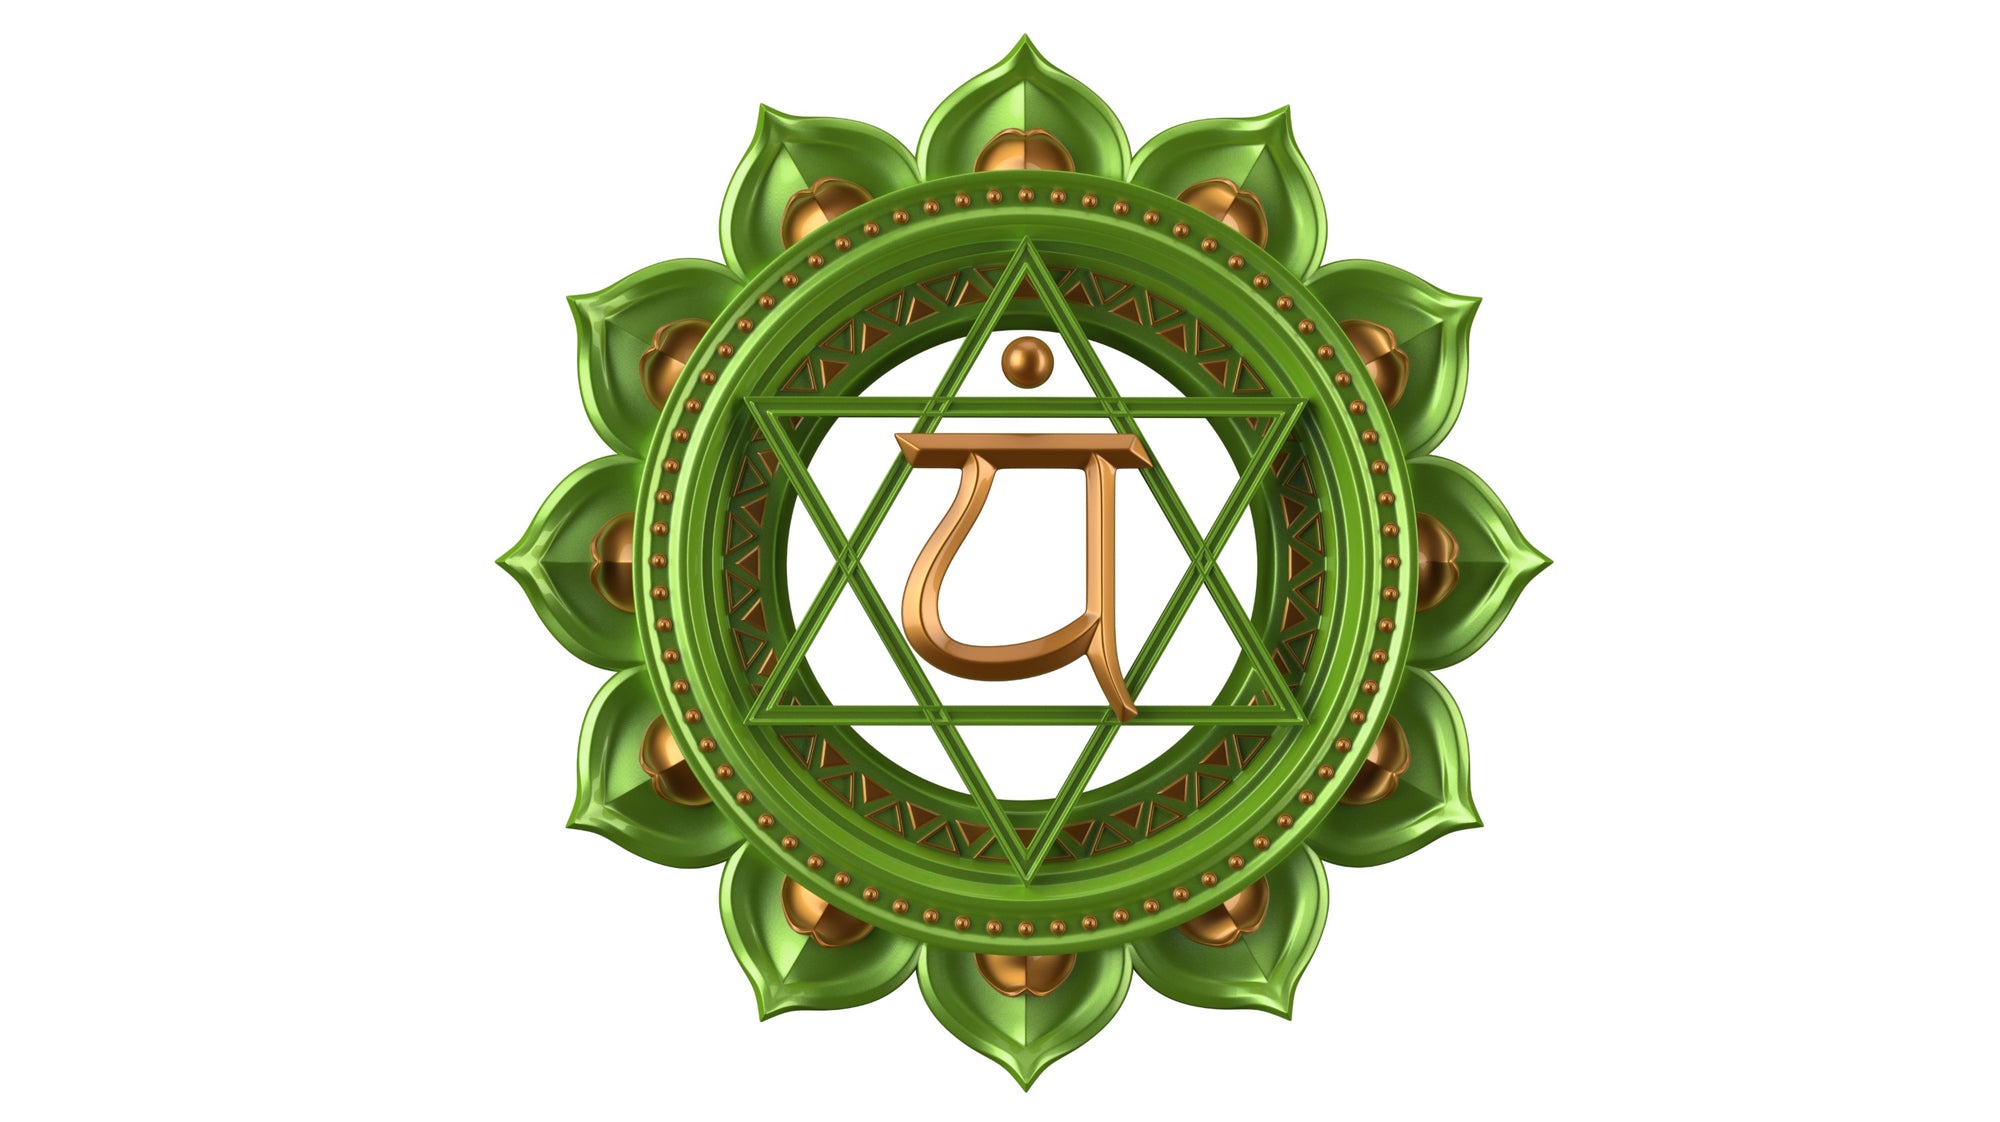 Image of the Anahata Chakra symbol